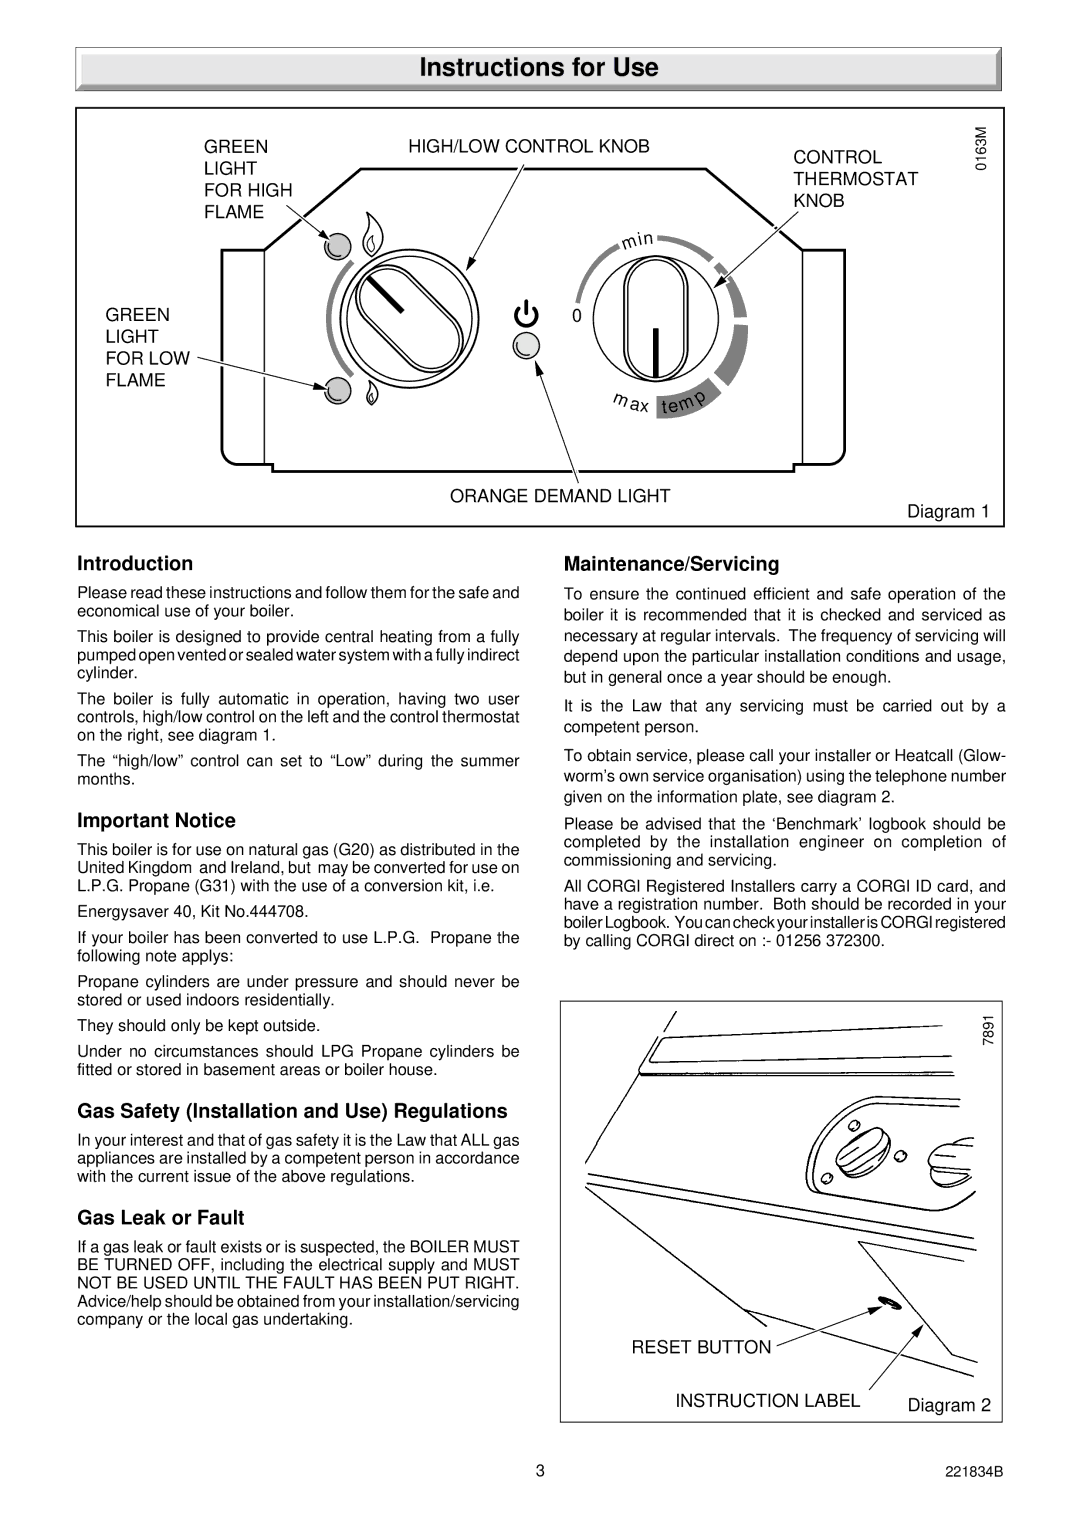 Glowworm Lighting 40 manual Instructions for Use 